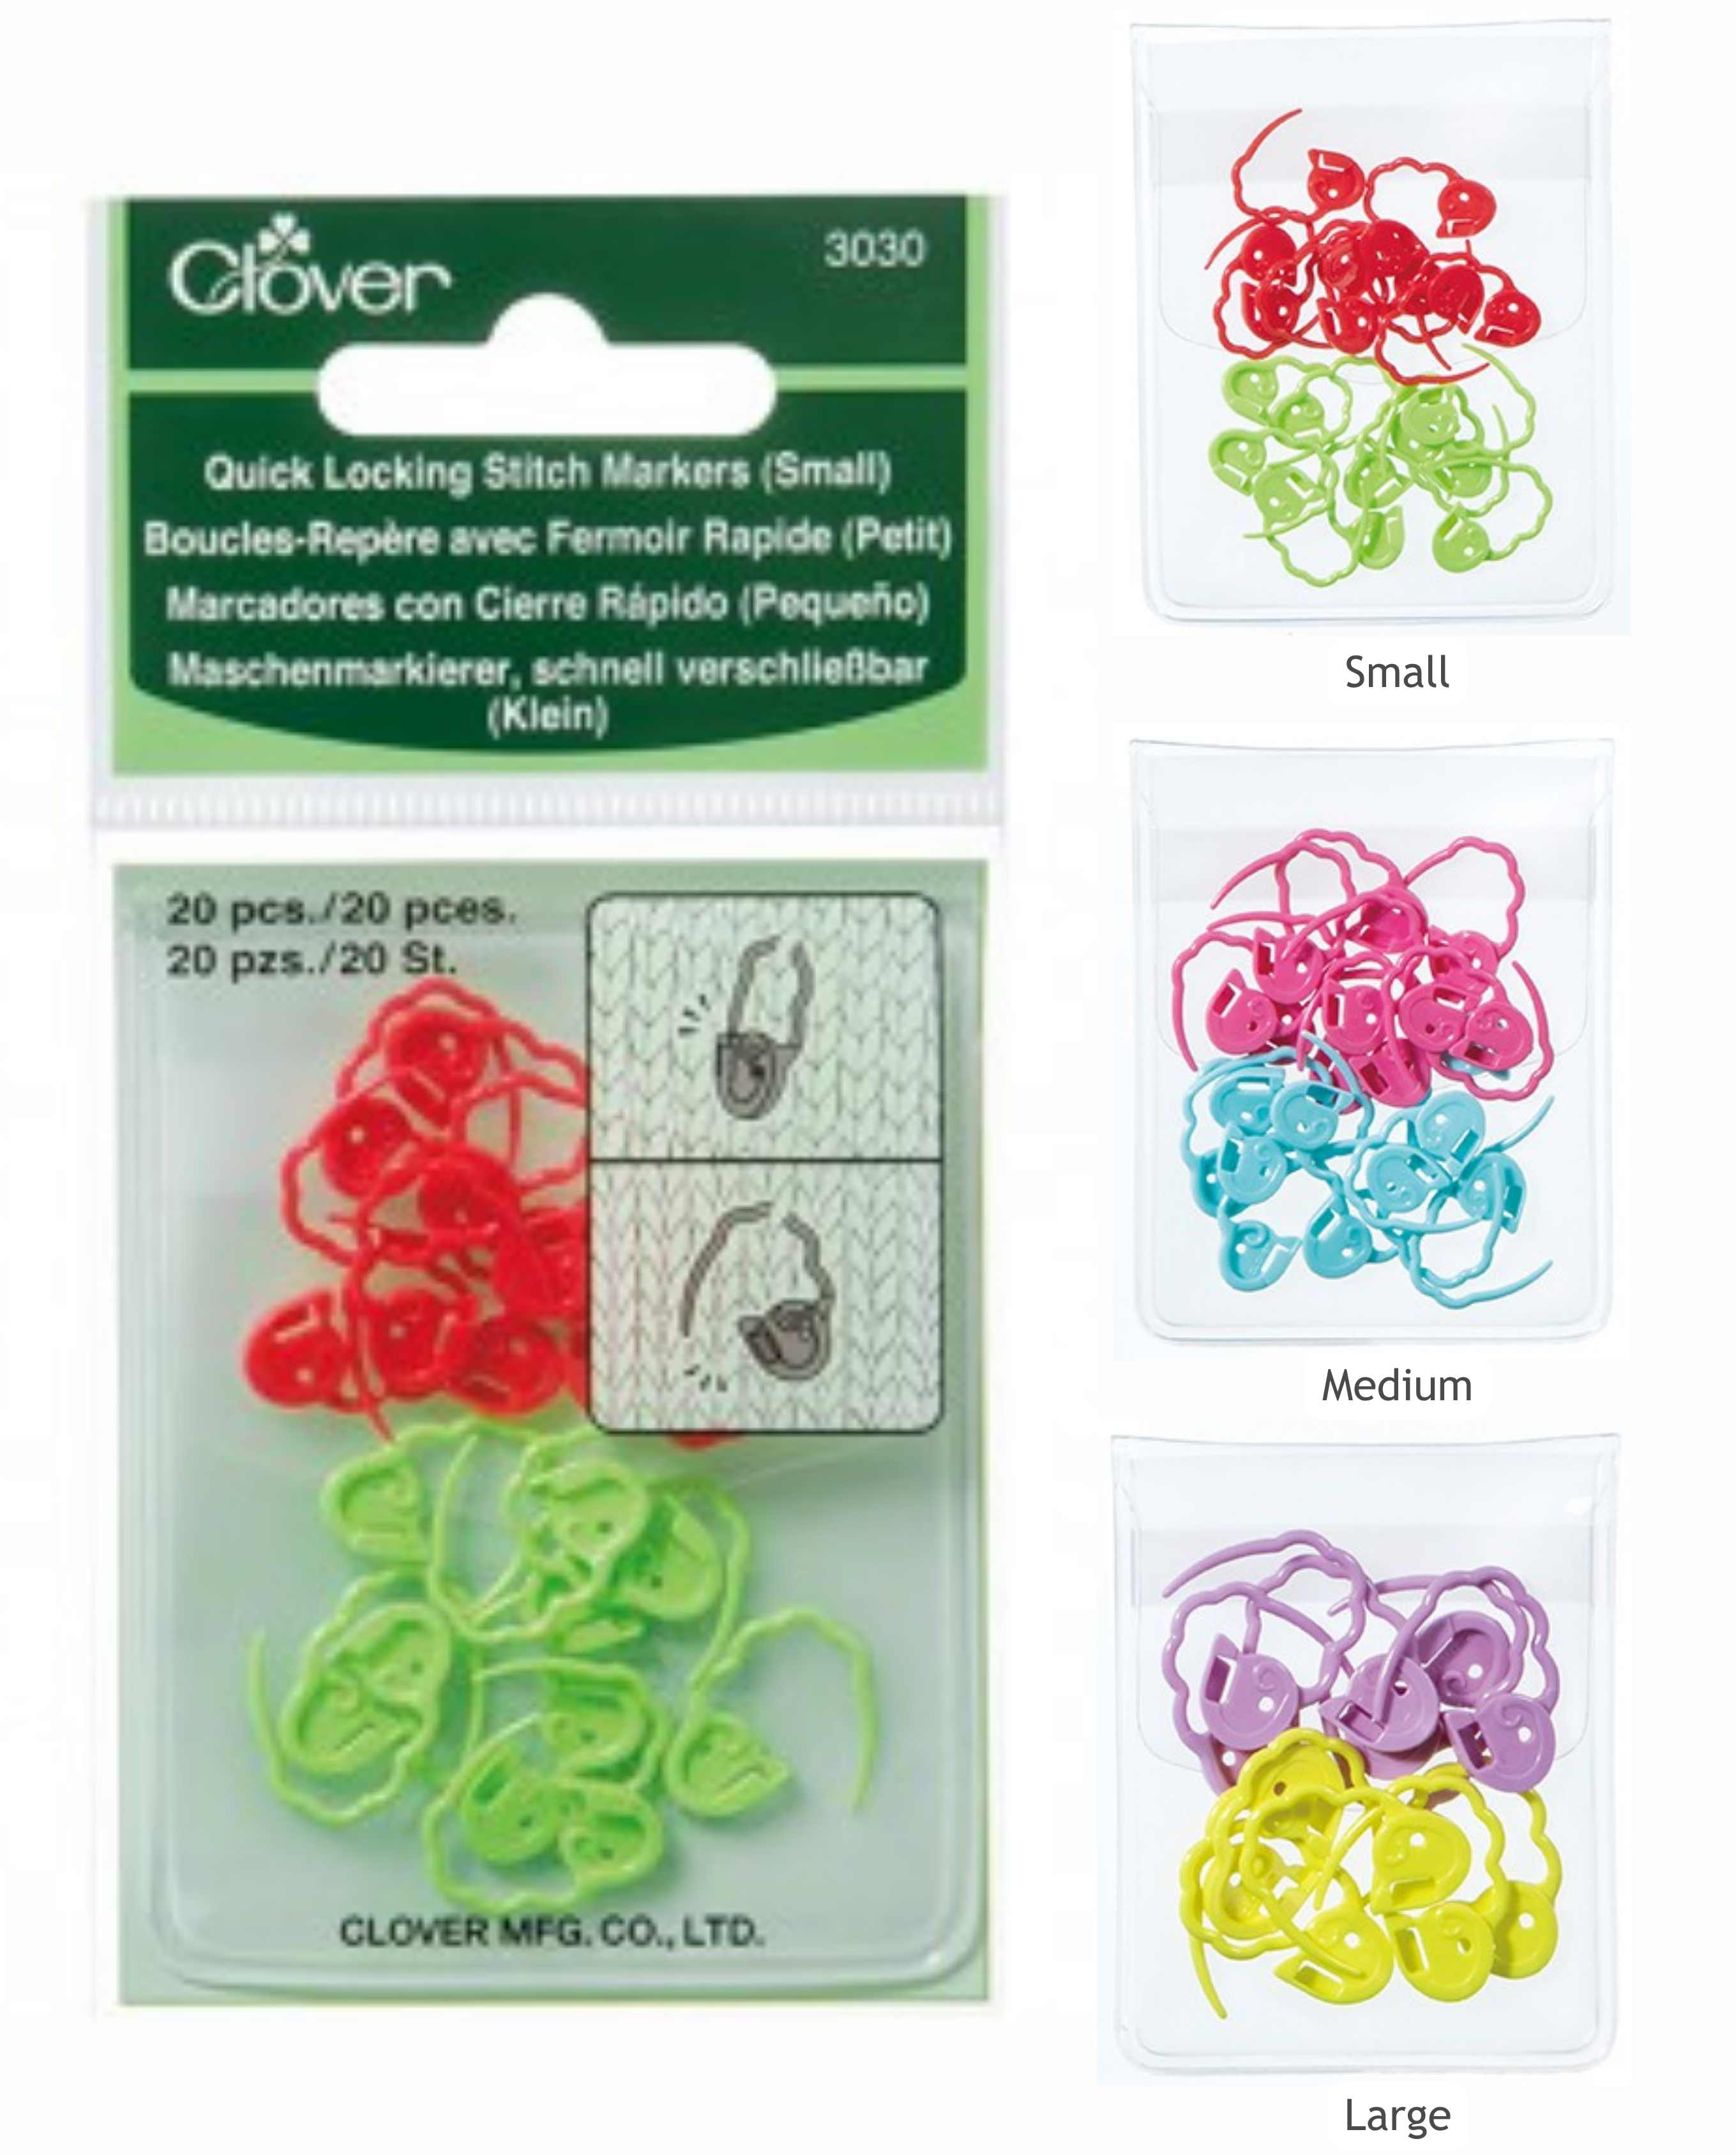 Clover Quick Locking Stitch Markers Accessory